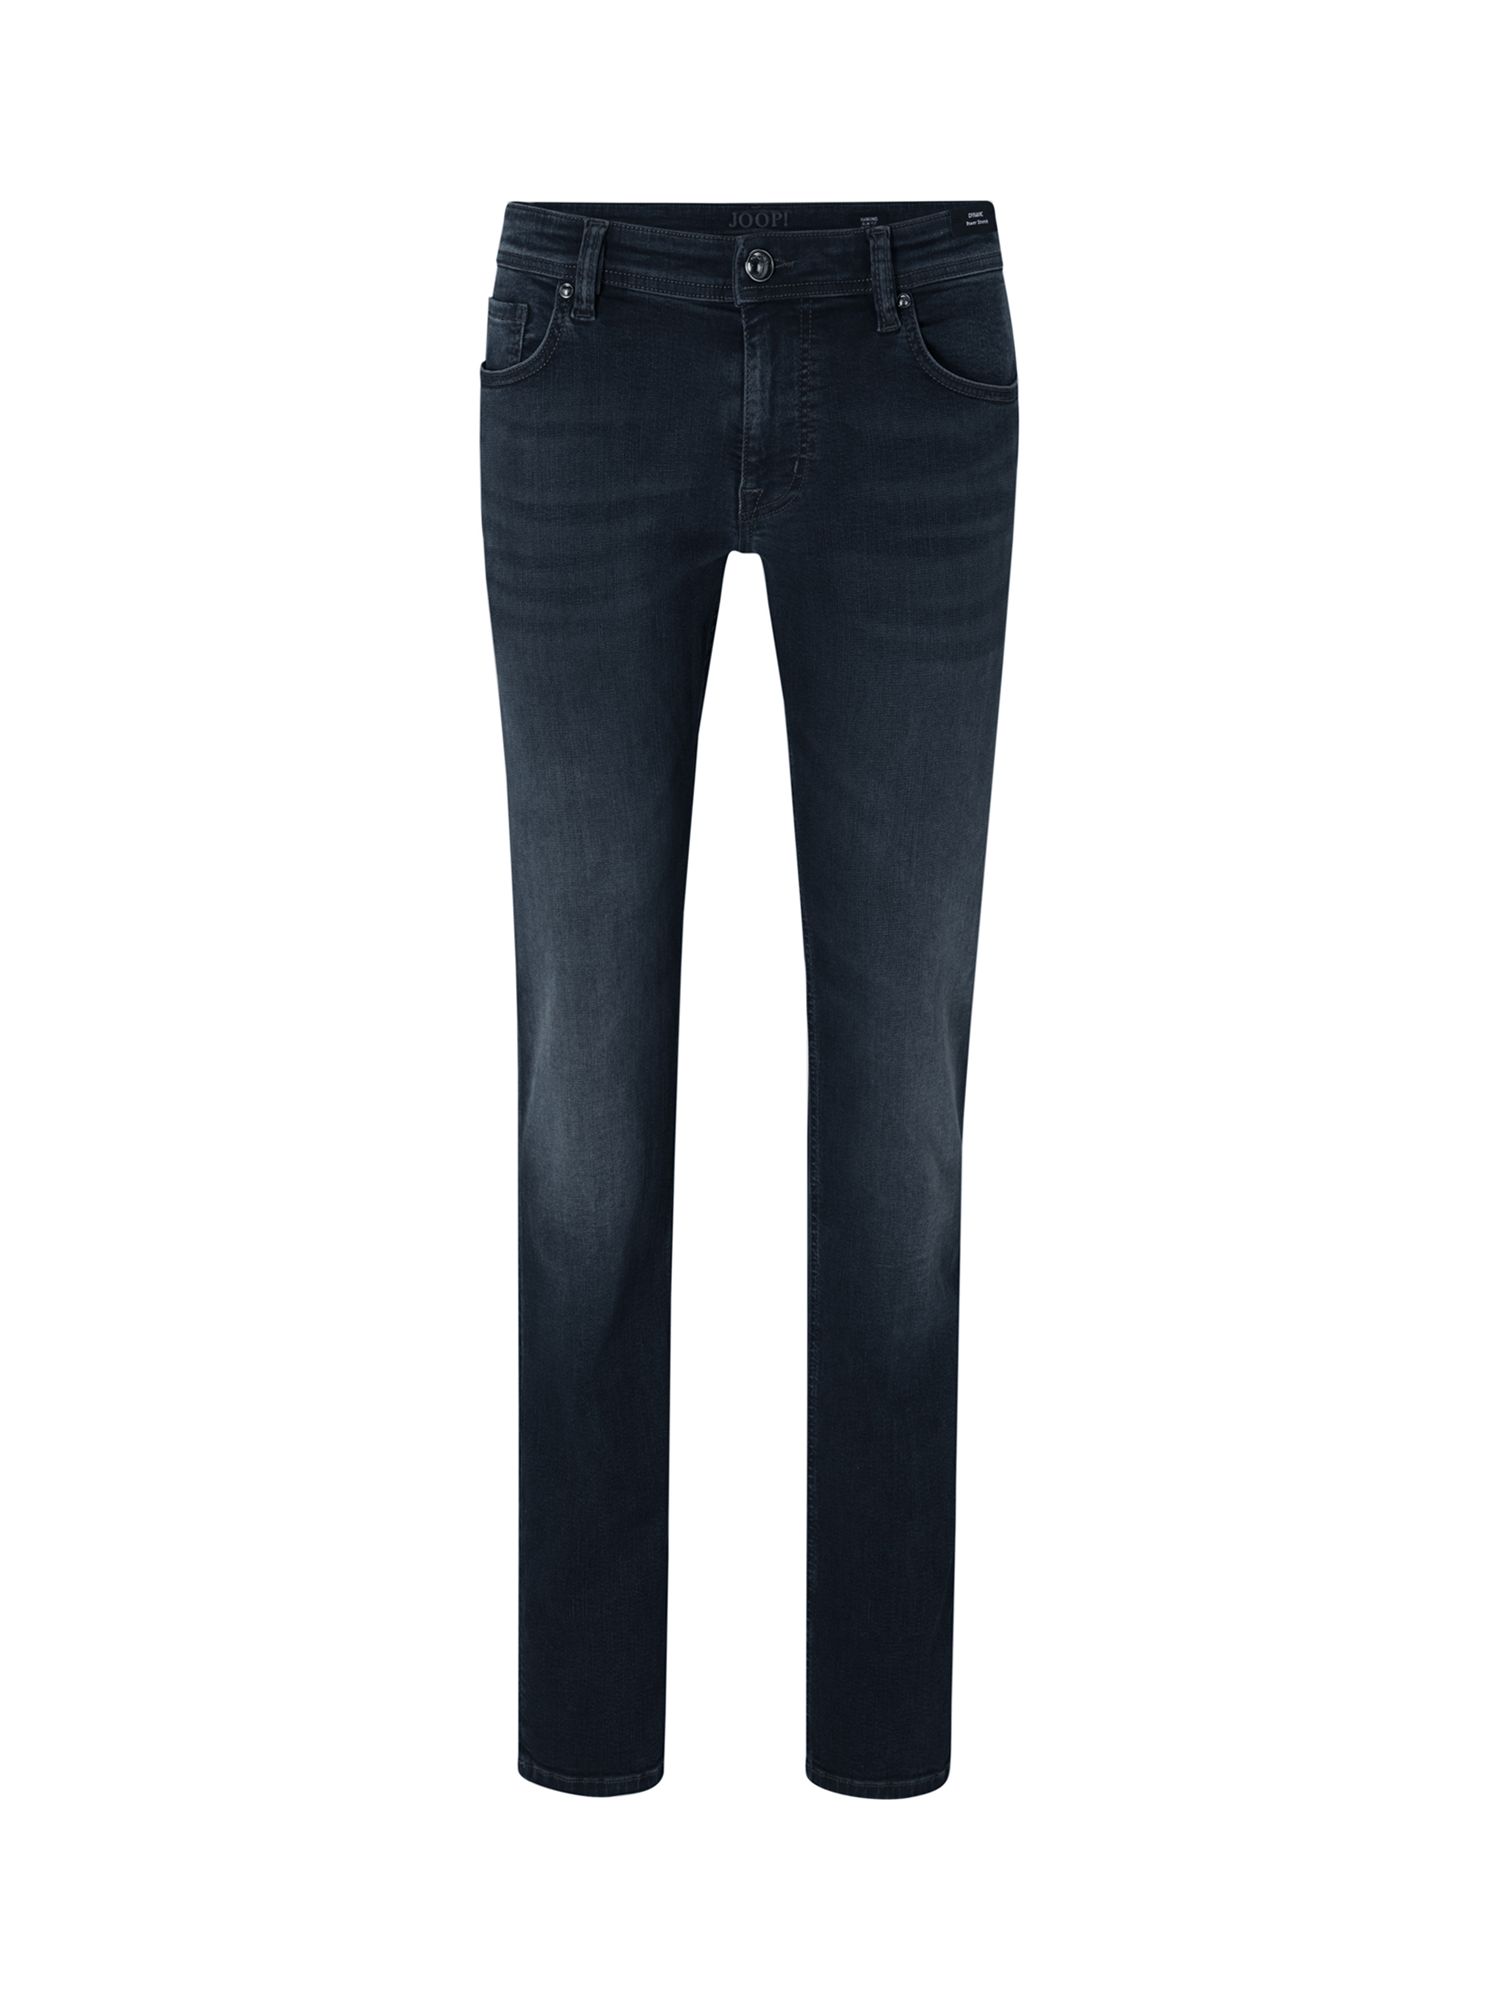 JOOP! Hamond Slim Fit Jeans, Medium Blue at John Lewis & Partners